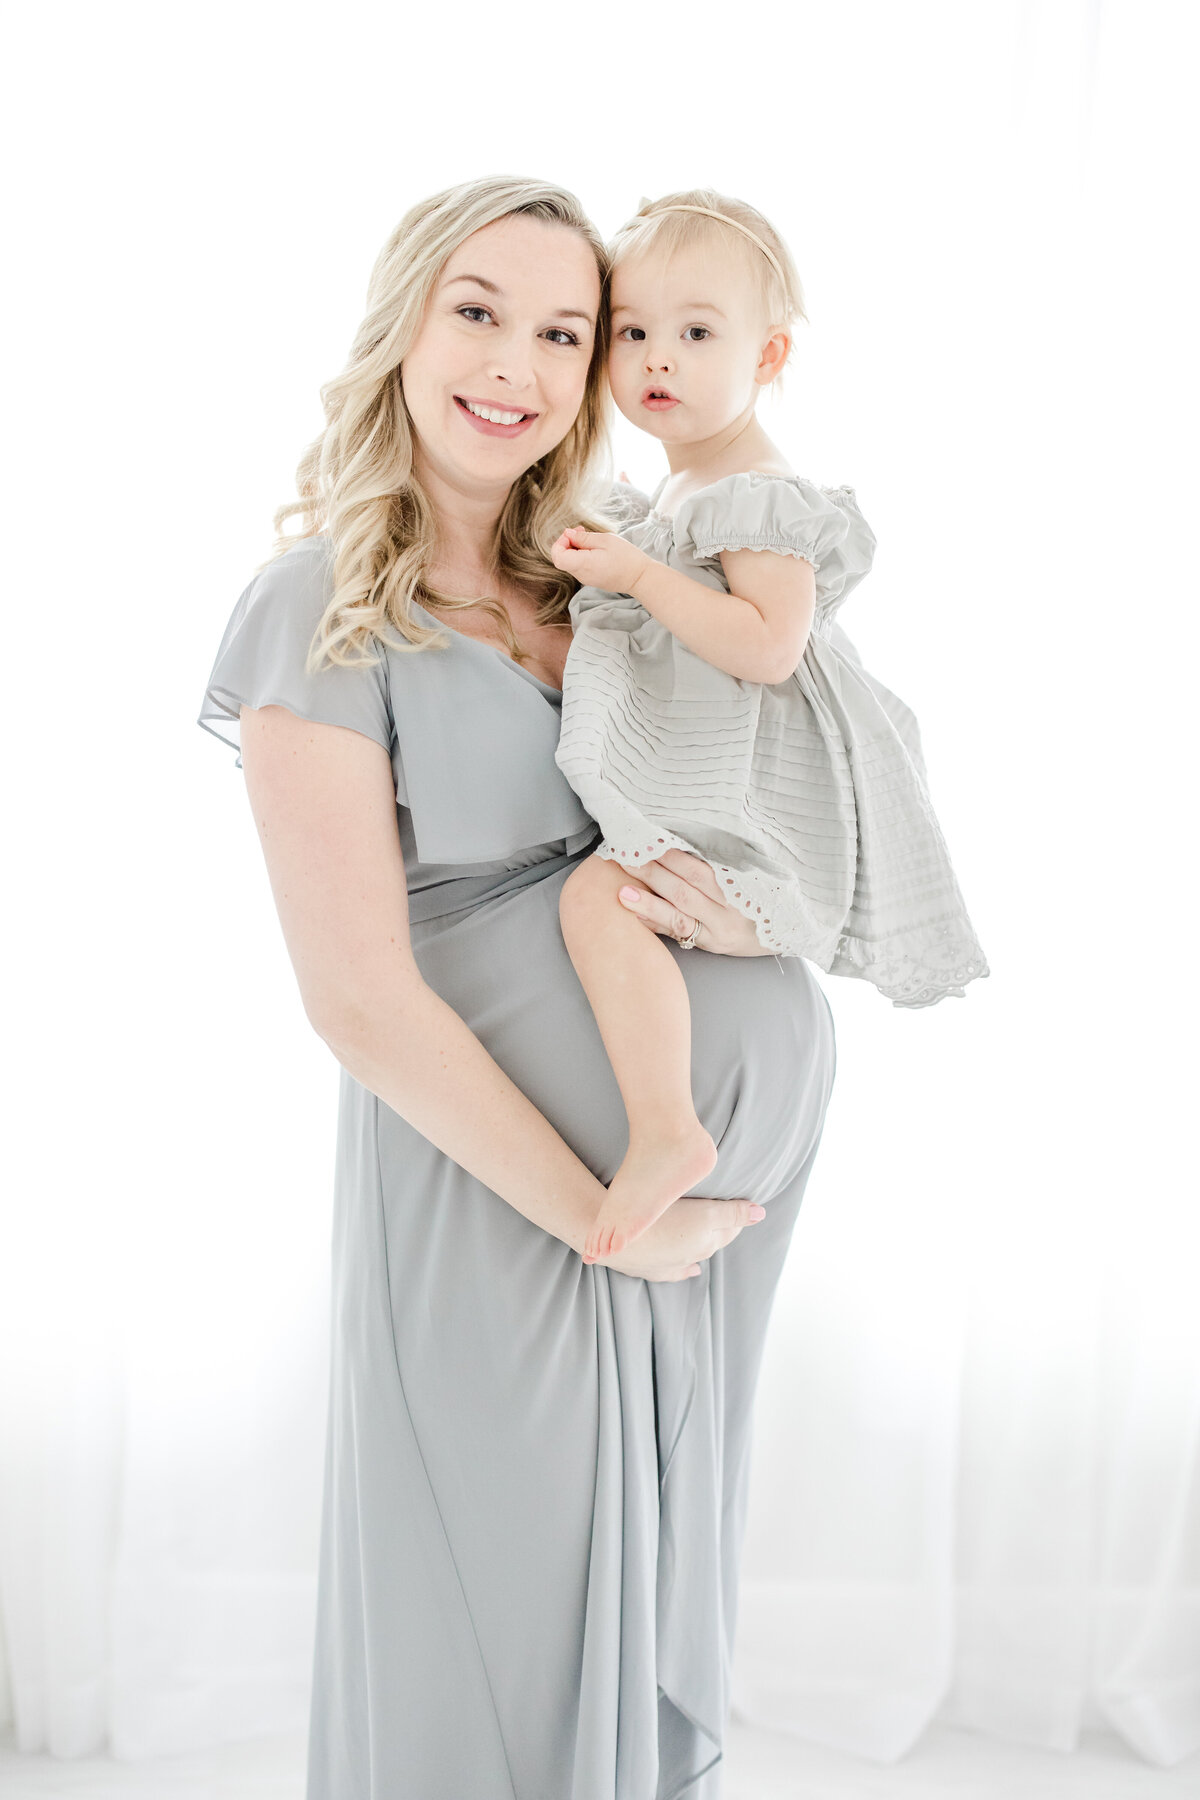 Westport CT Maternity Photographer - 49